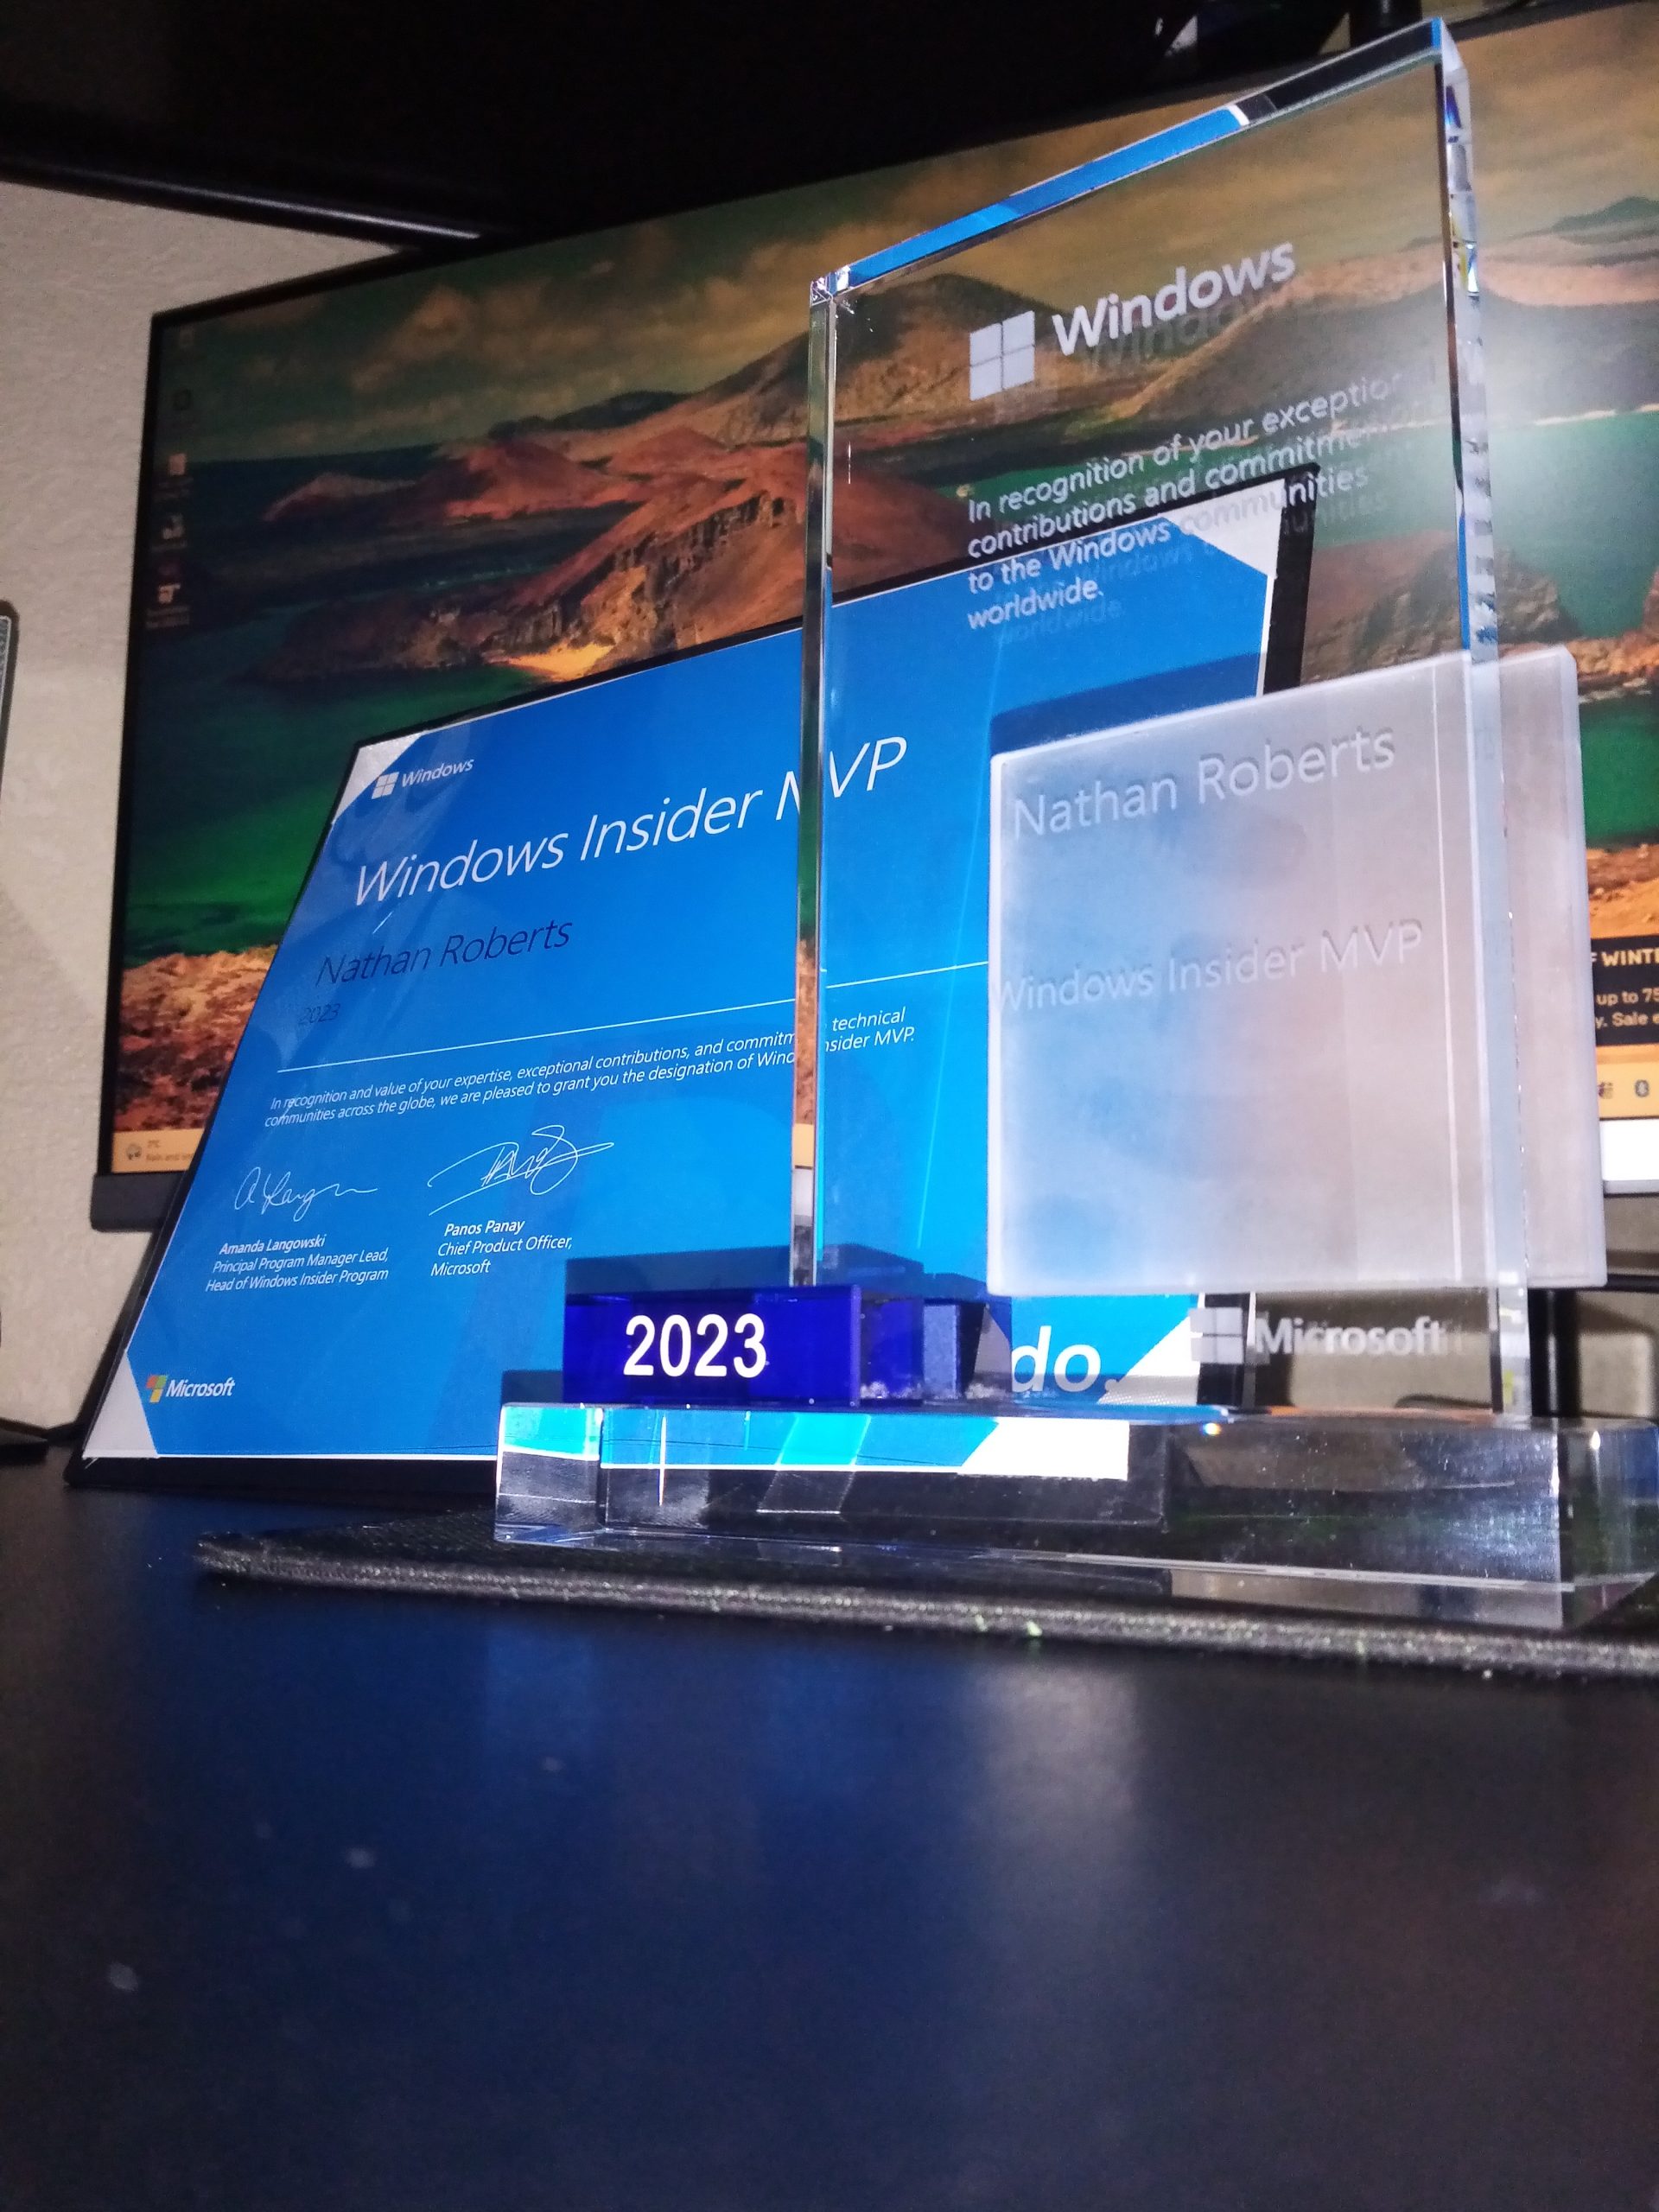 Achieved the Windows Insider MVP award